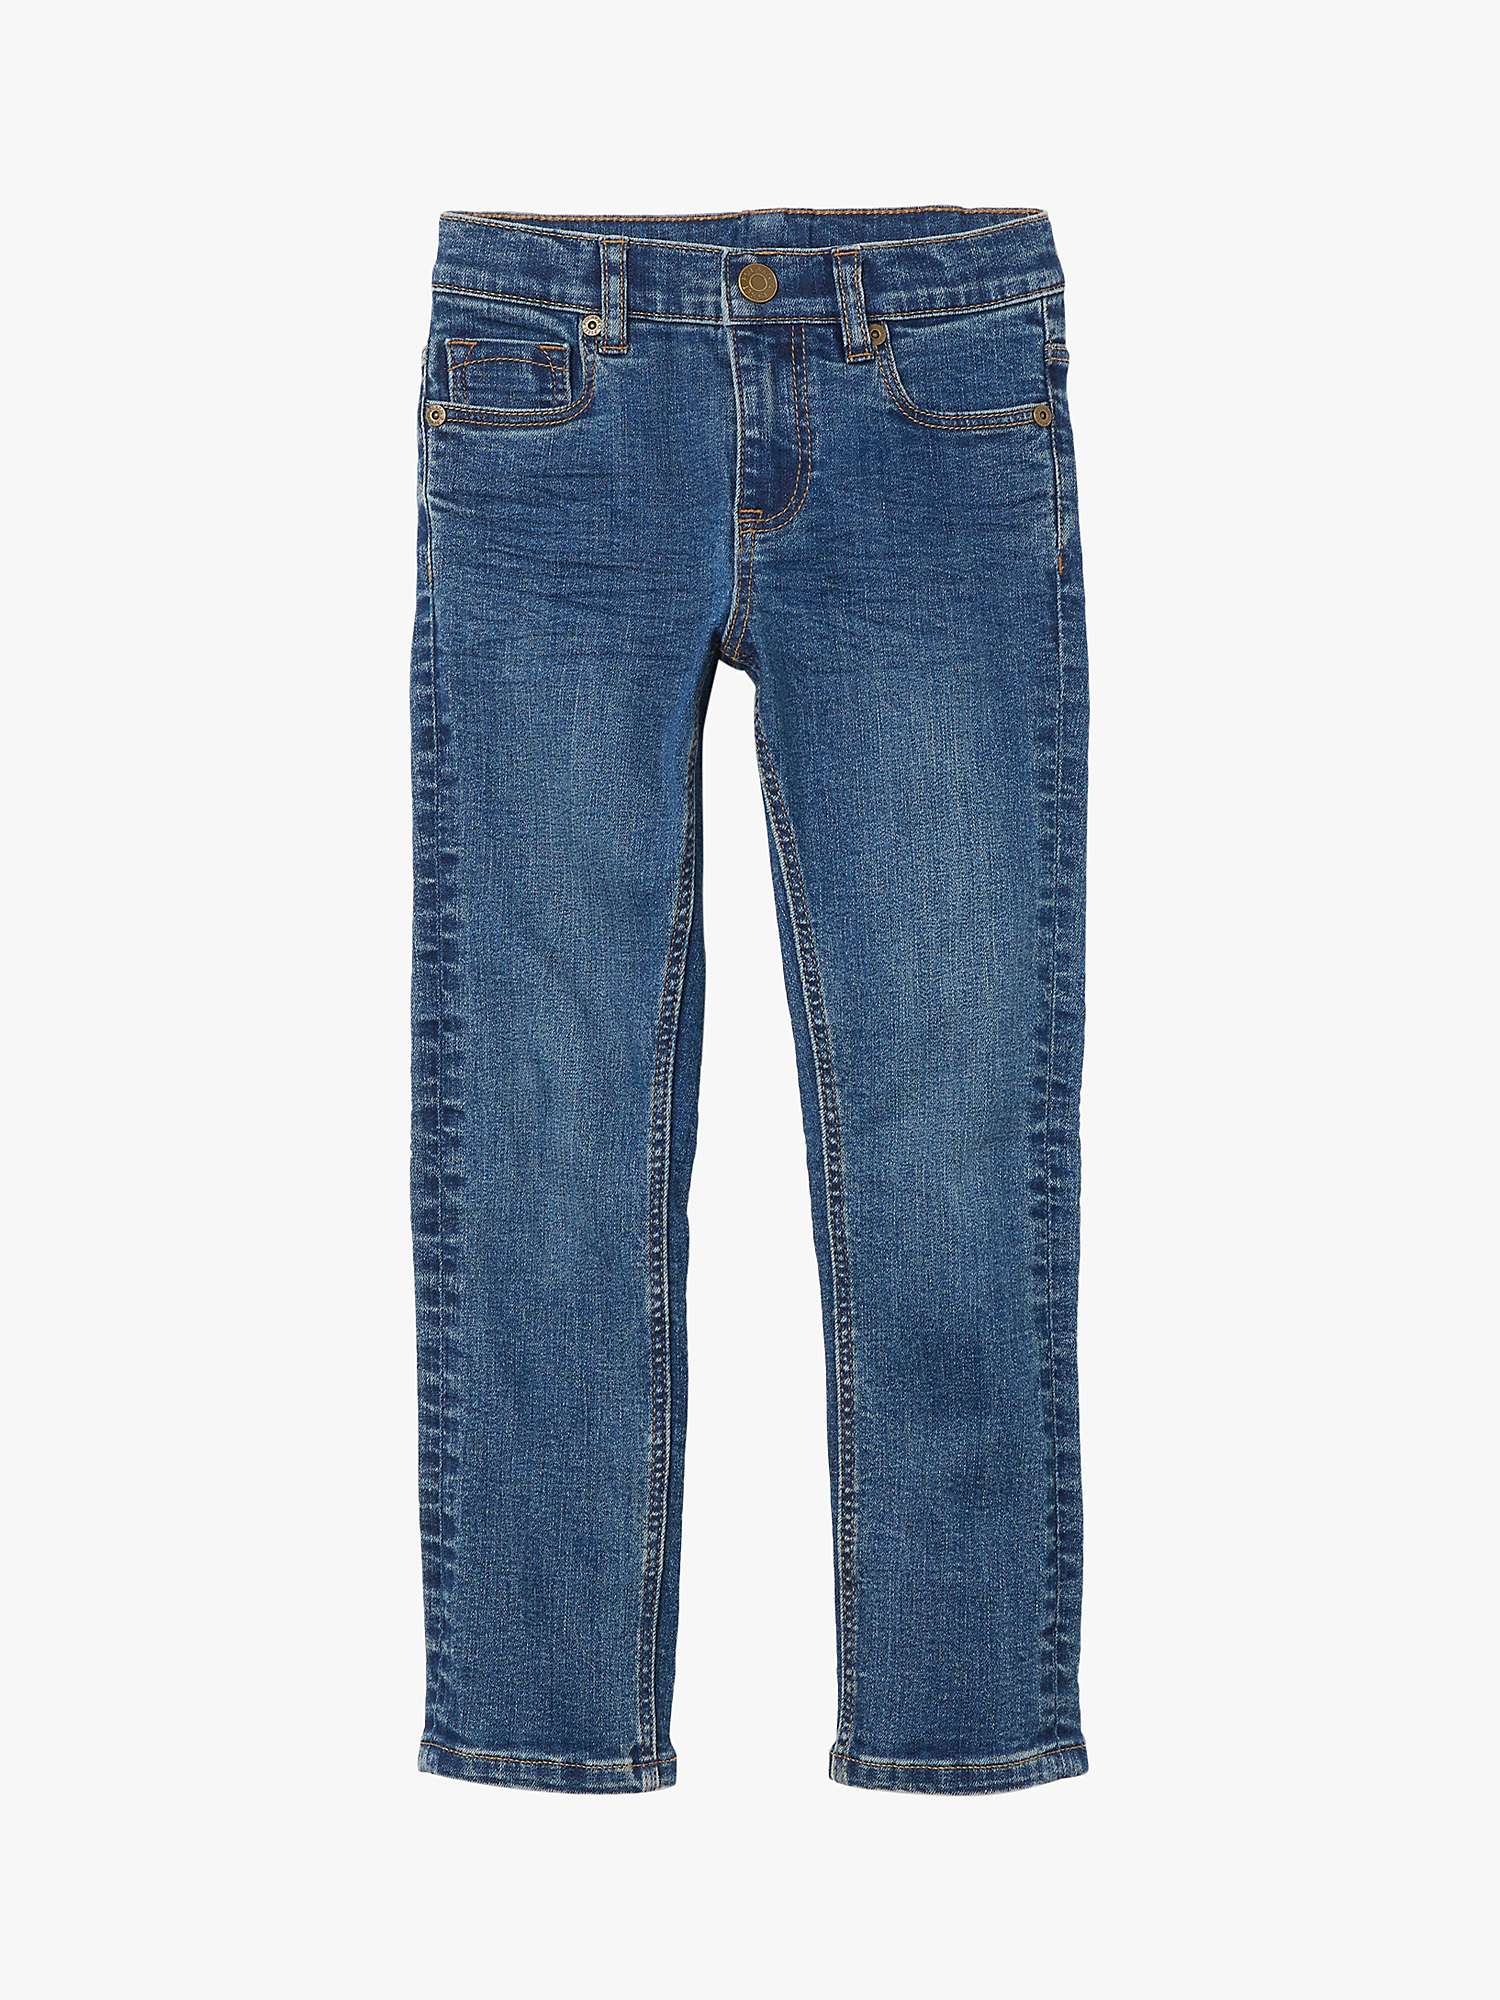 Buy Polarn O. Pyret Kids' Slim Fit Organic Cotton Blend Jeans, Blue Online at johnlewis.com